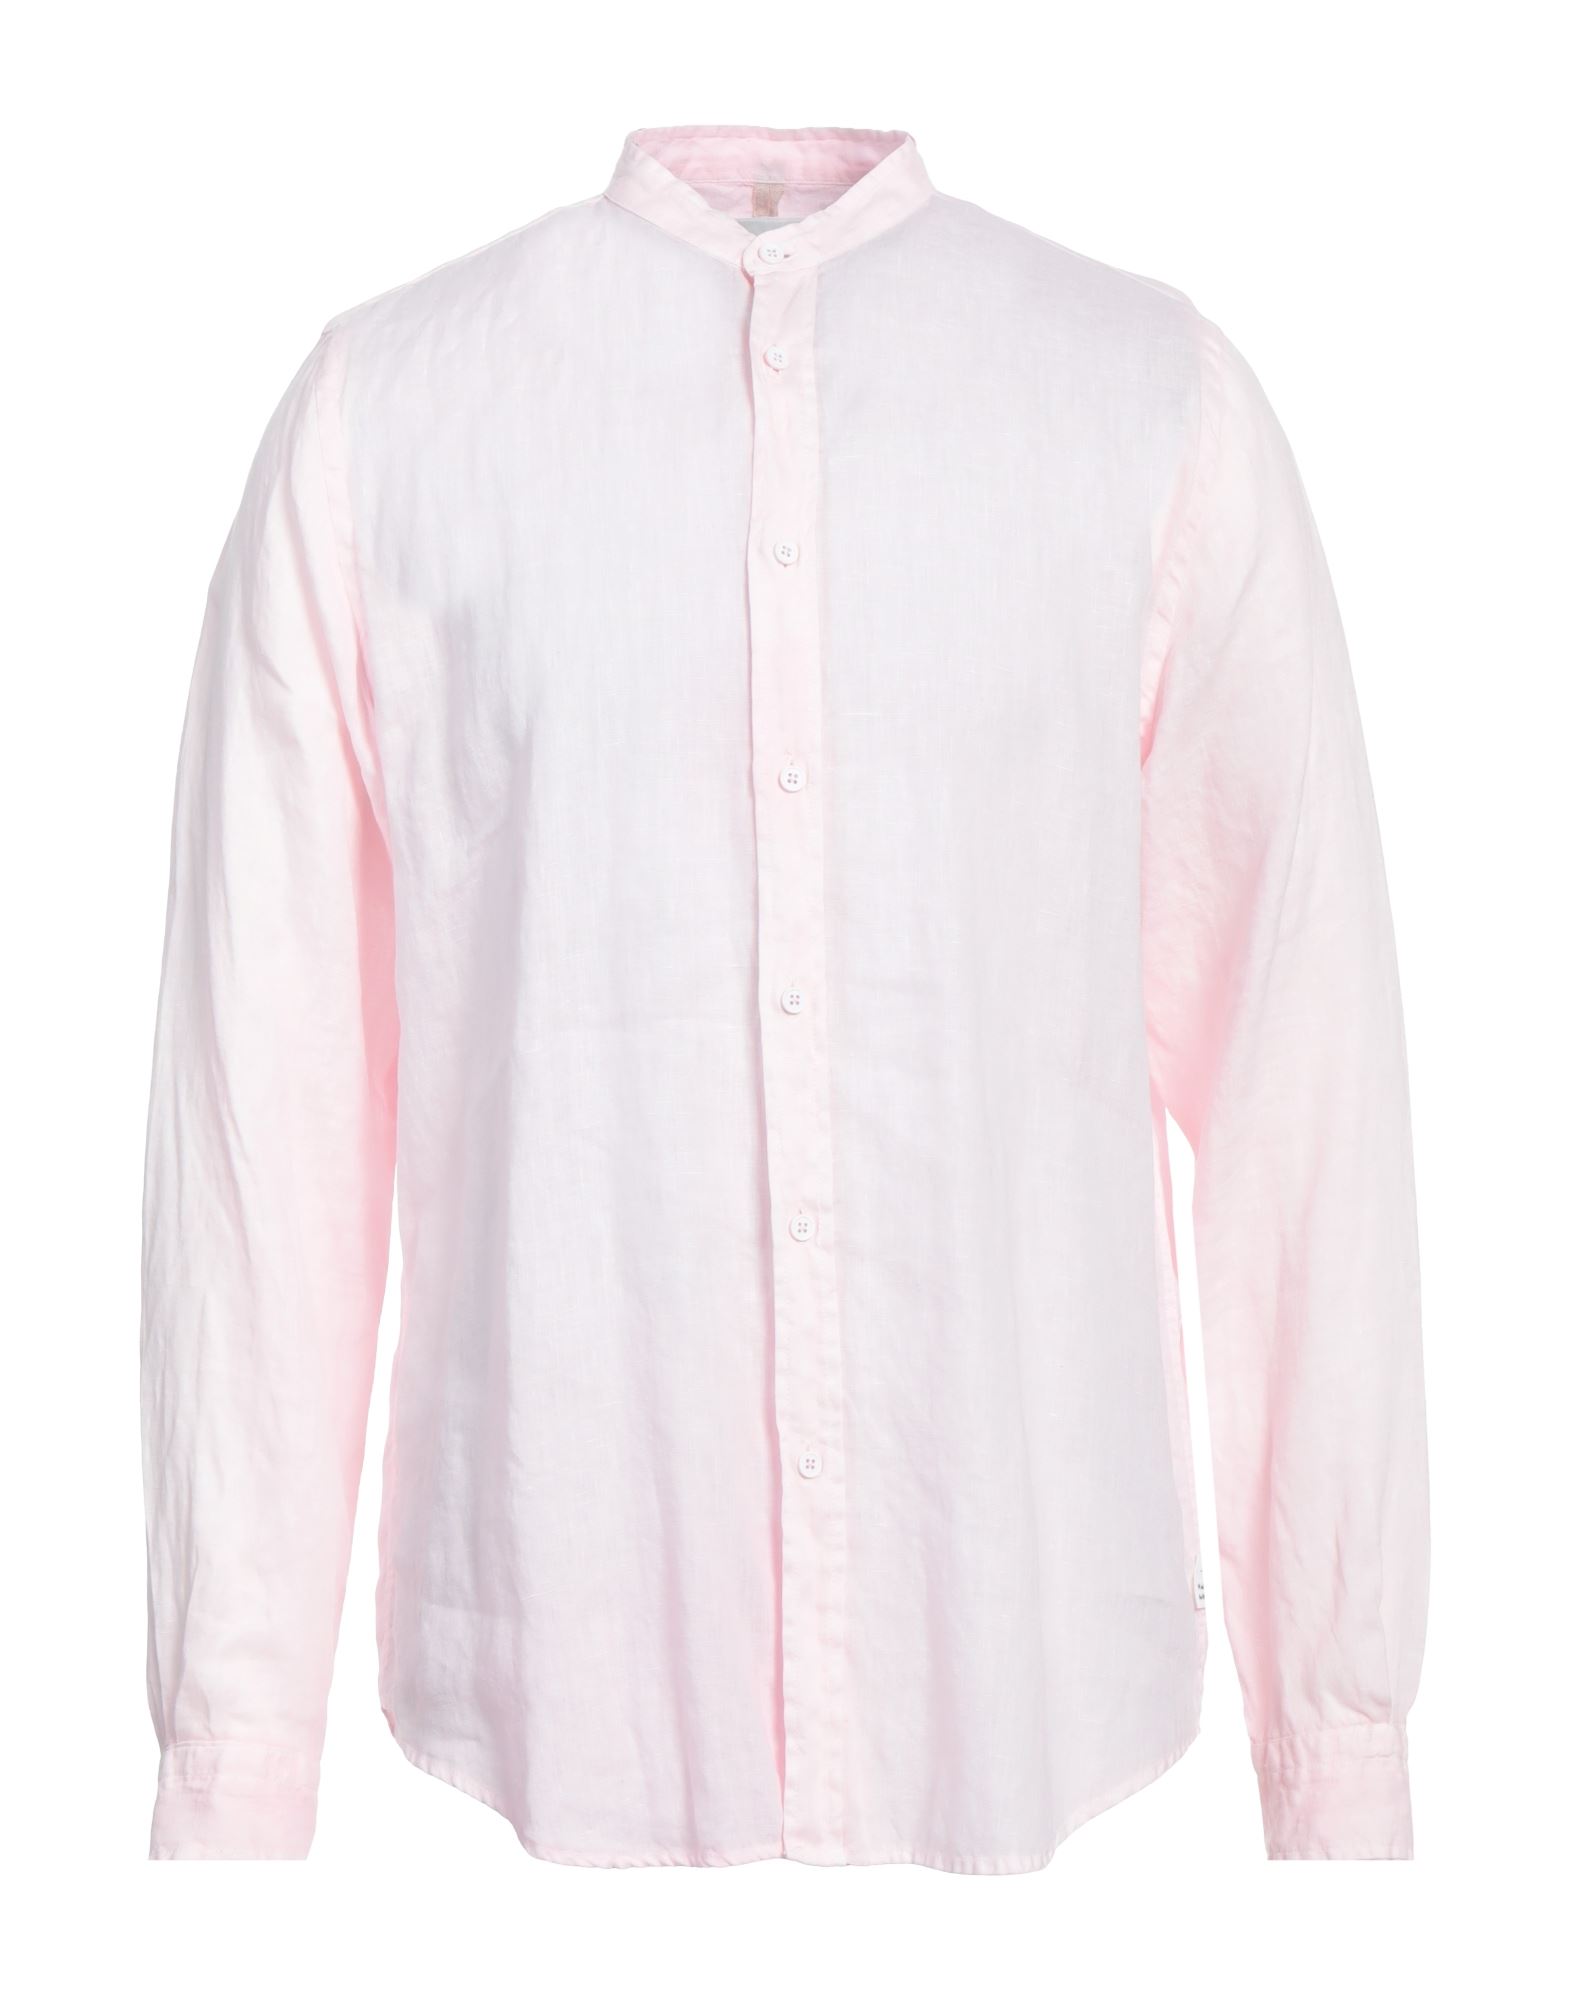 Portofiori Shirts In Pink